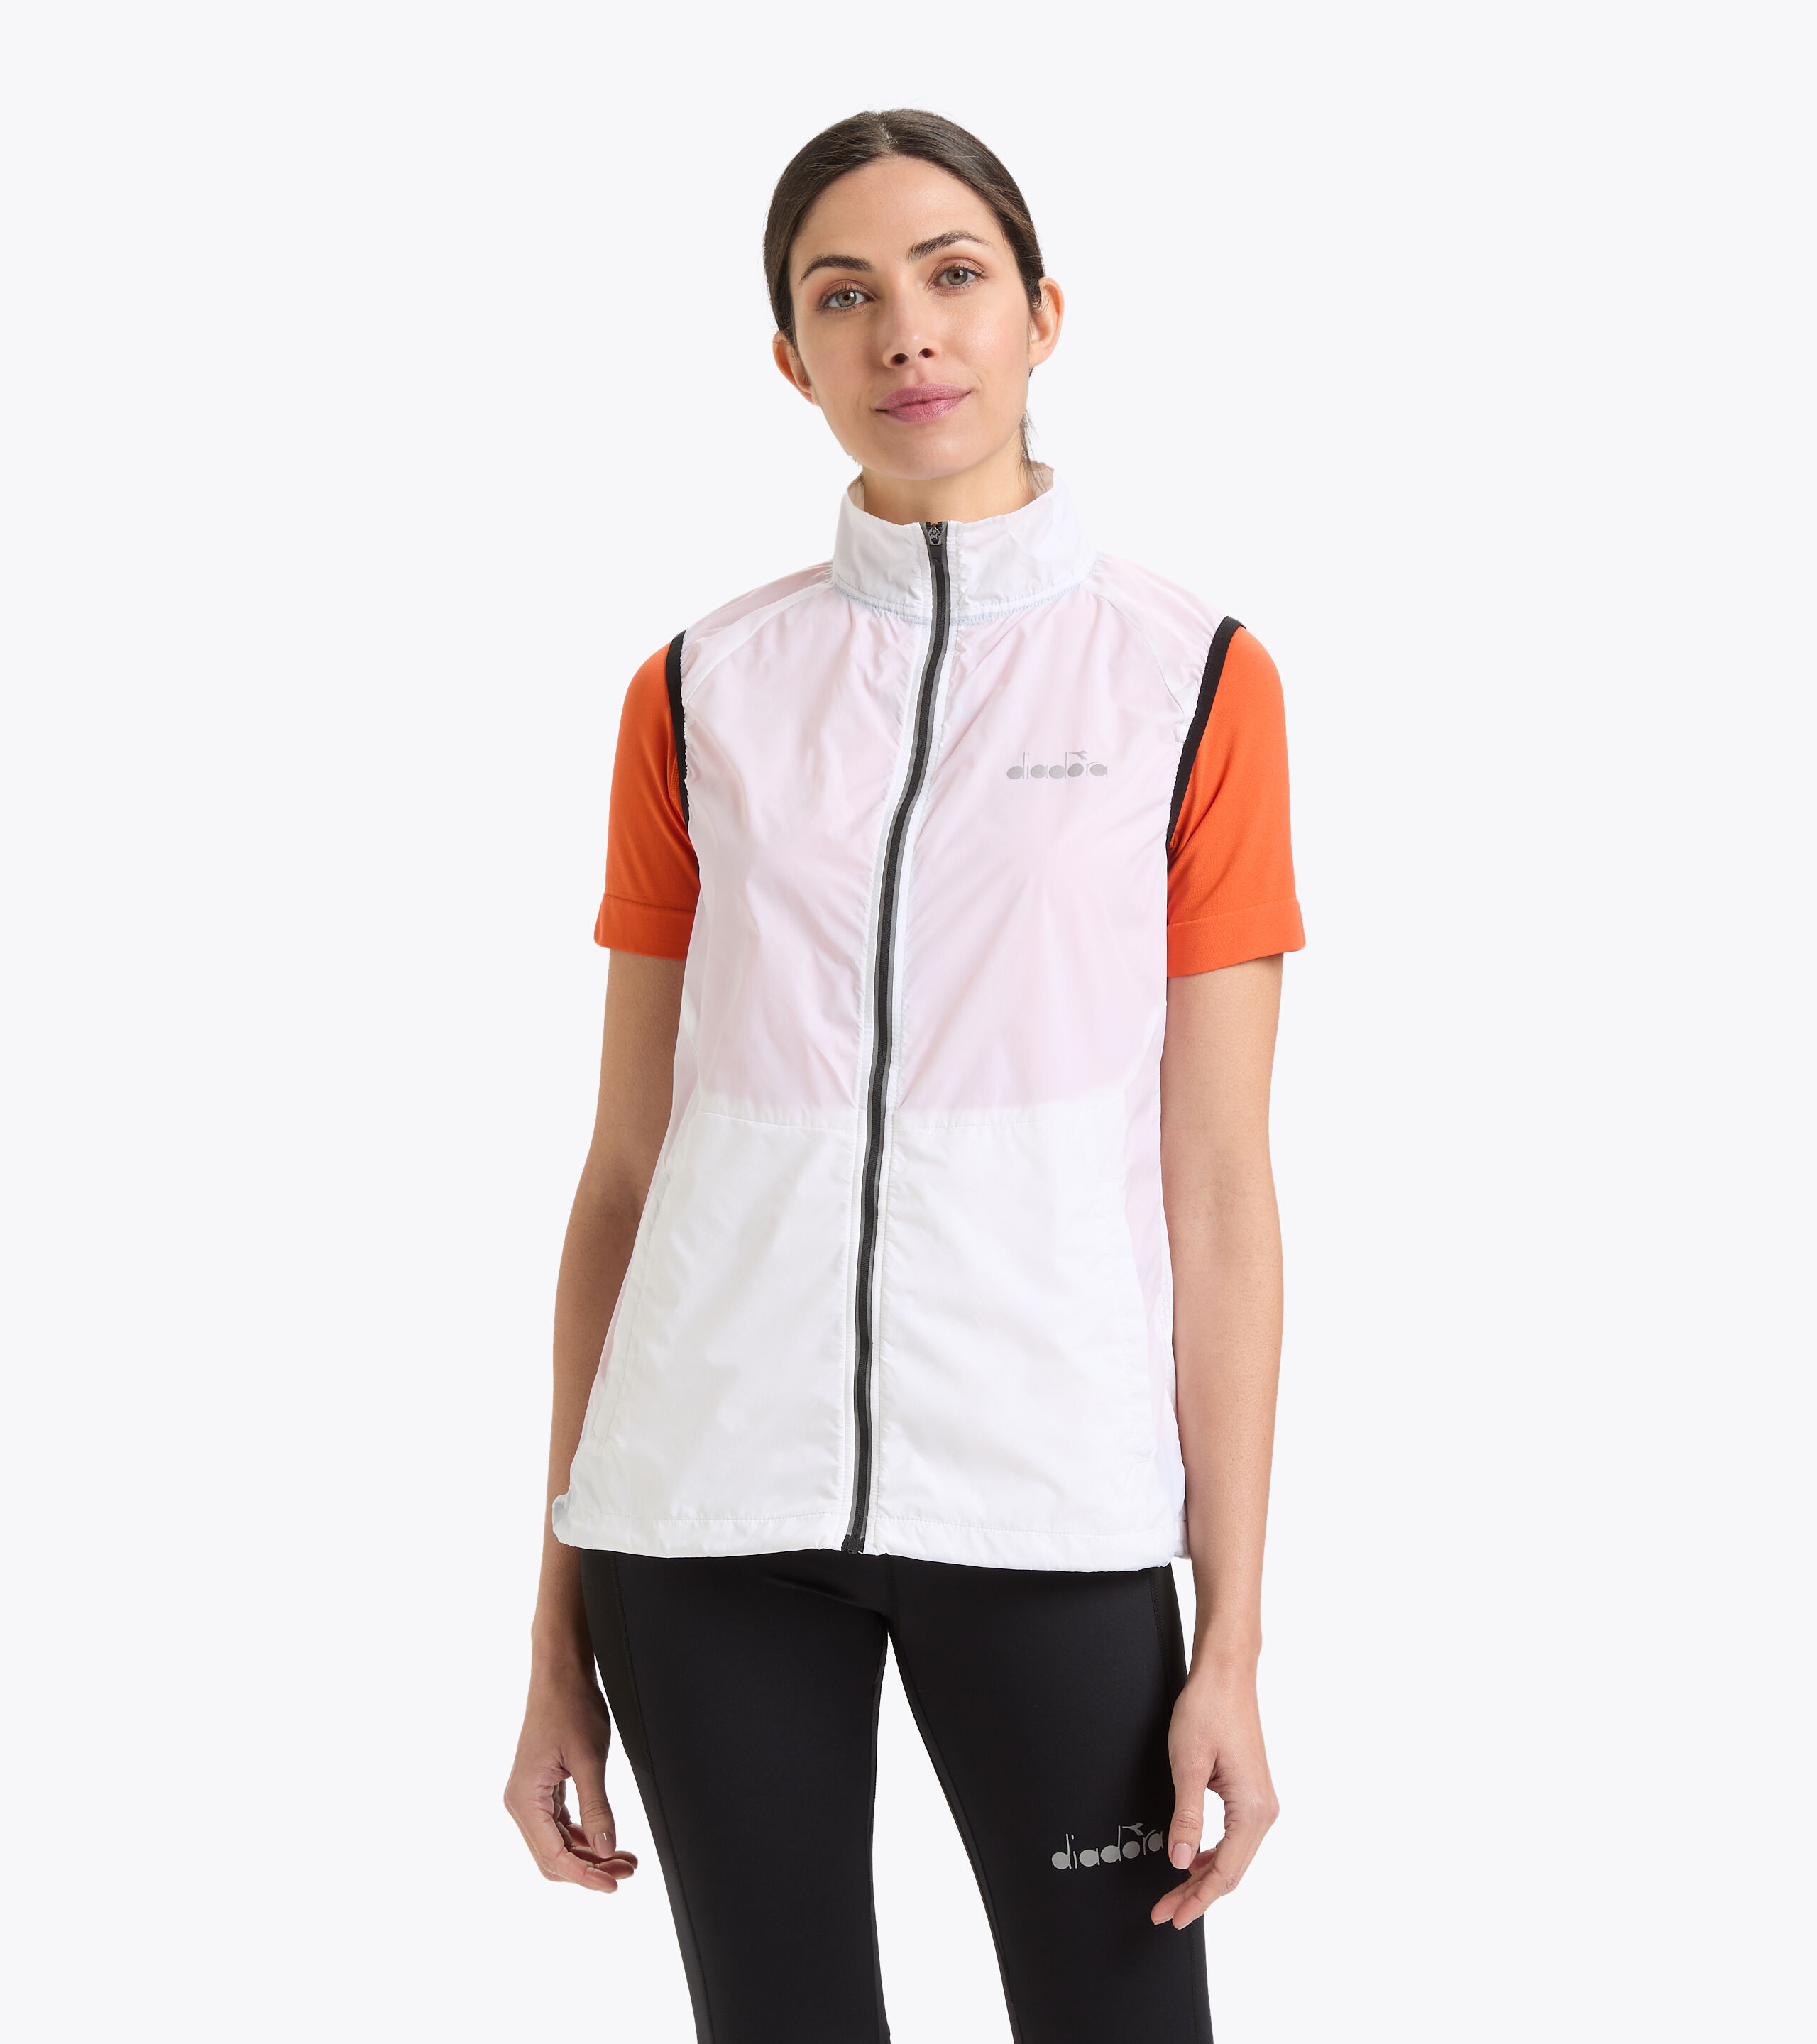 Diadora Polar Womens Sports Jacket White Thermal Full Zip Fleece S-M UK 8/10 